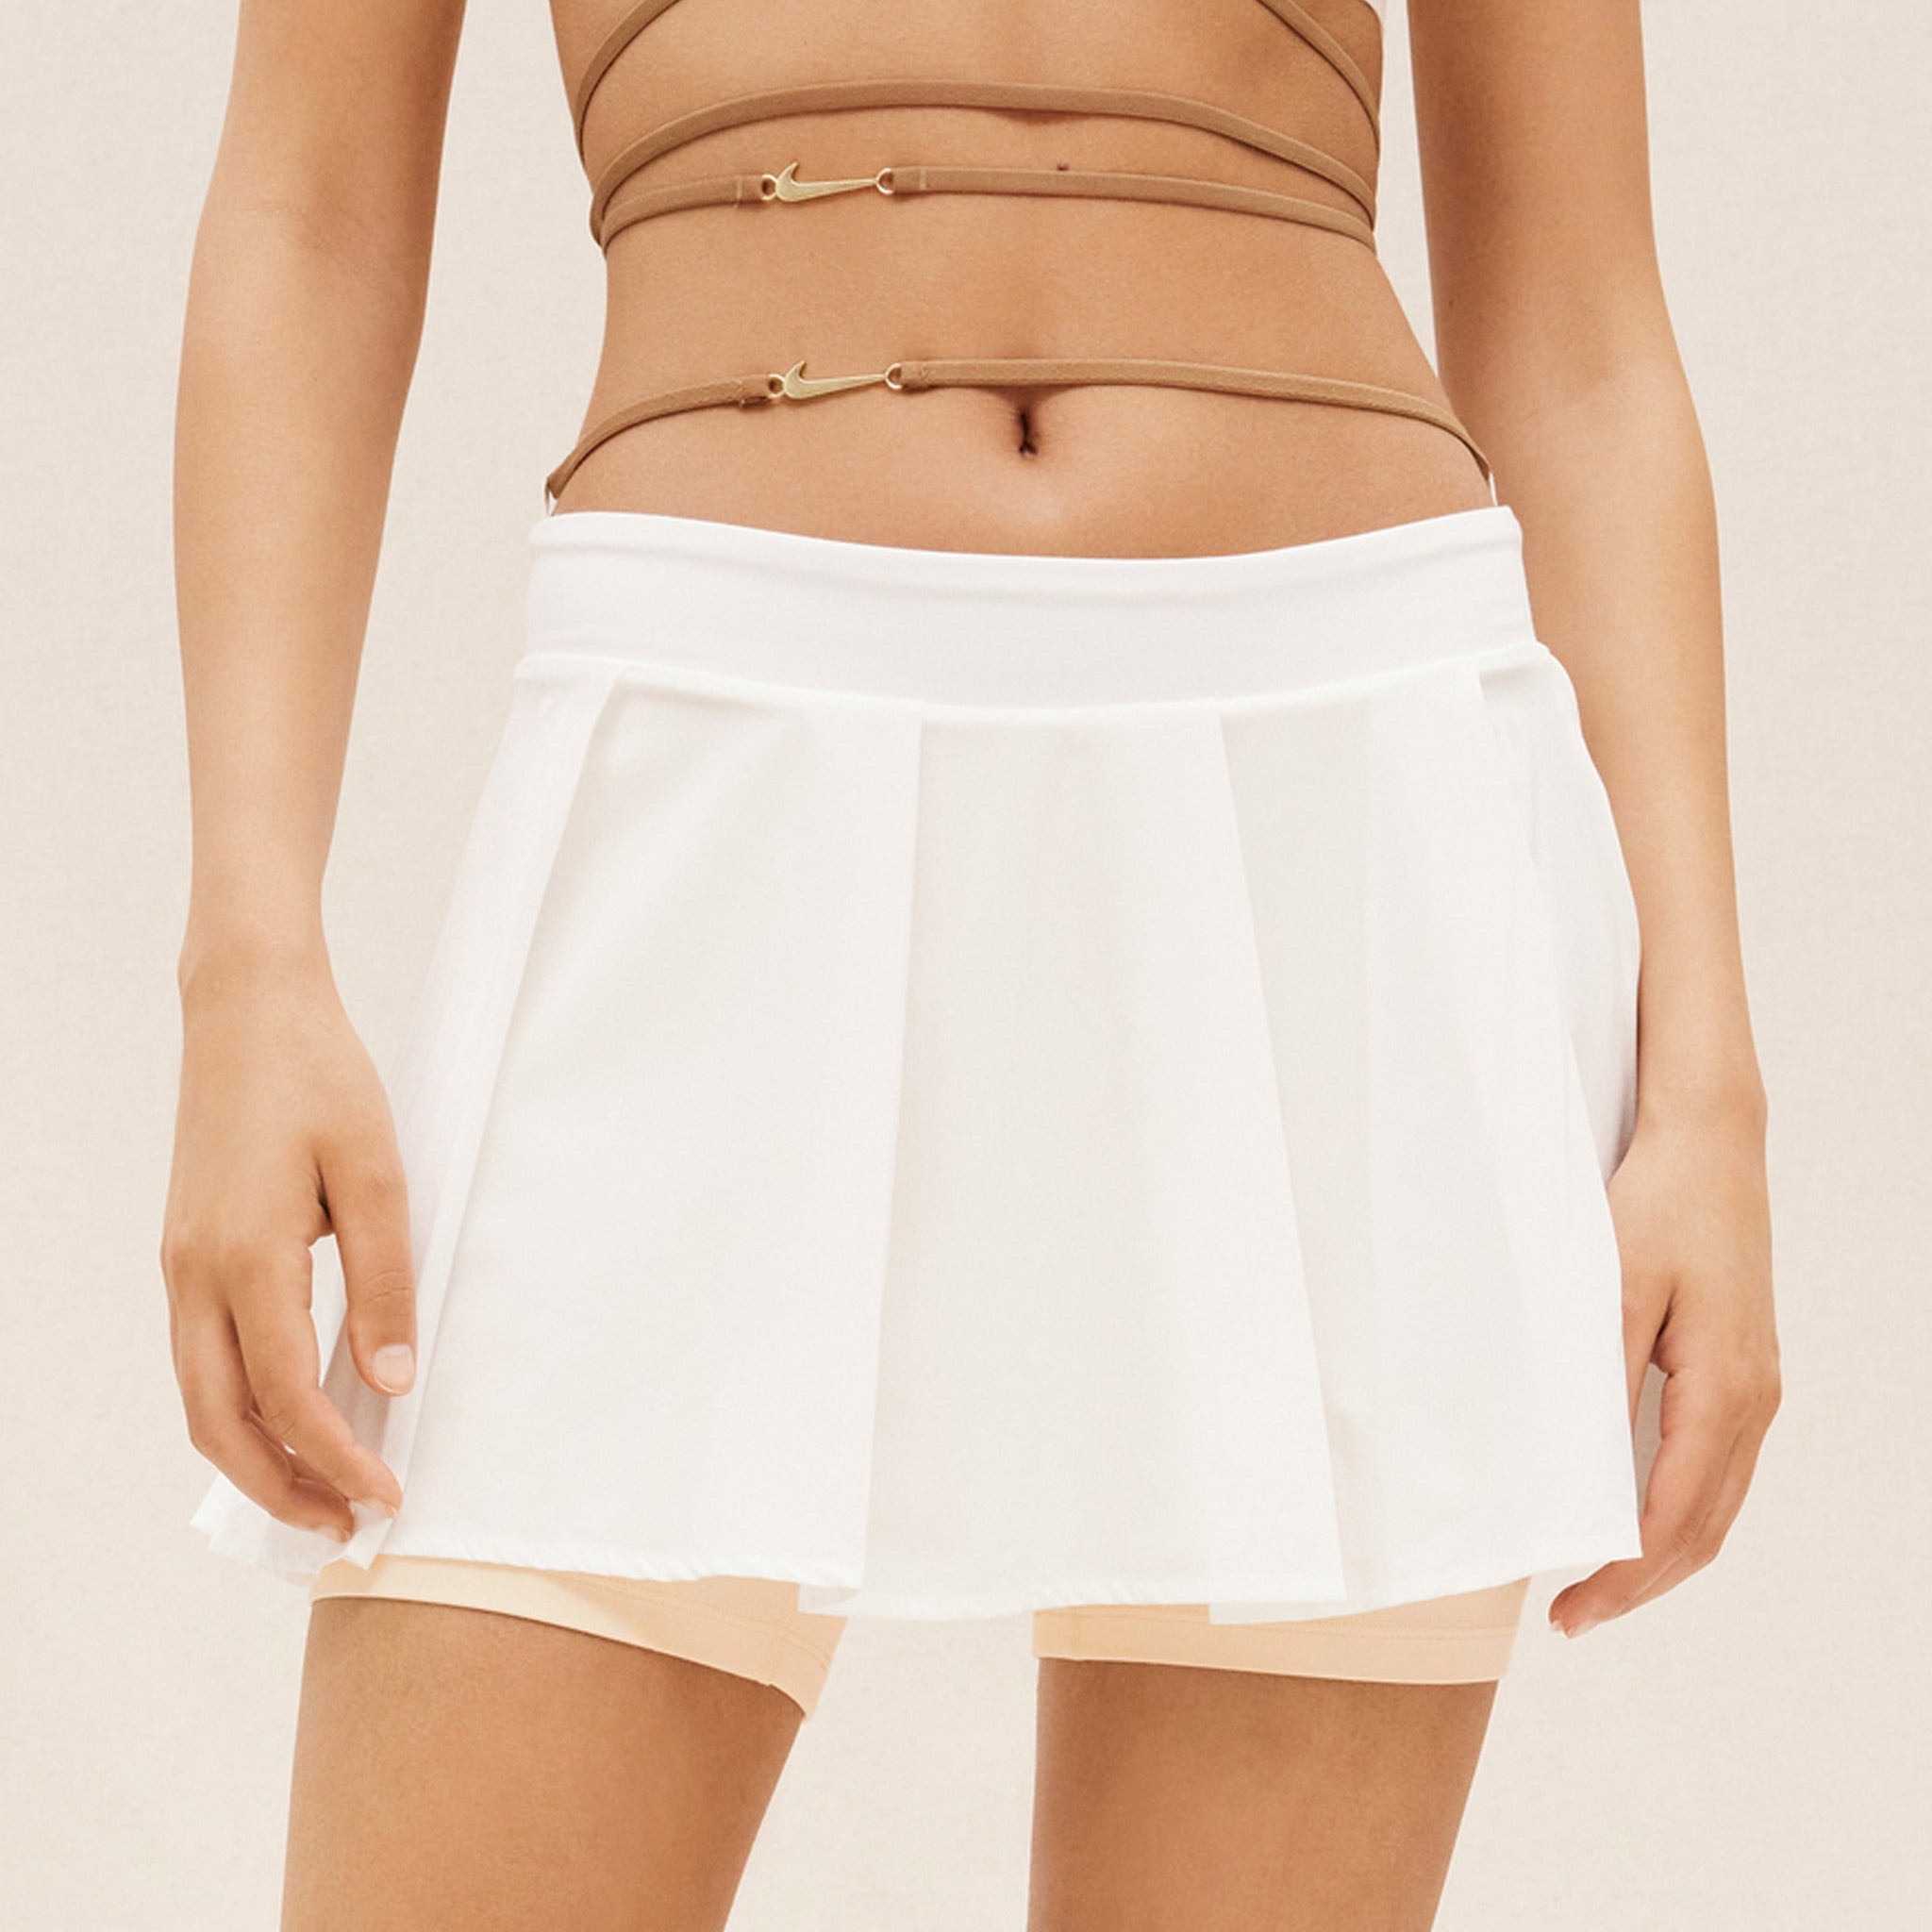 Nike x Jacquemus La Jupe Skirt / Short - Pearl White | Australia New Zealand  CLOSE UP